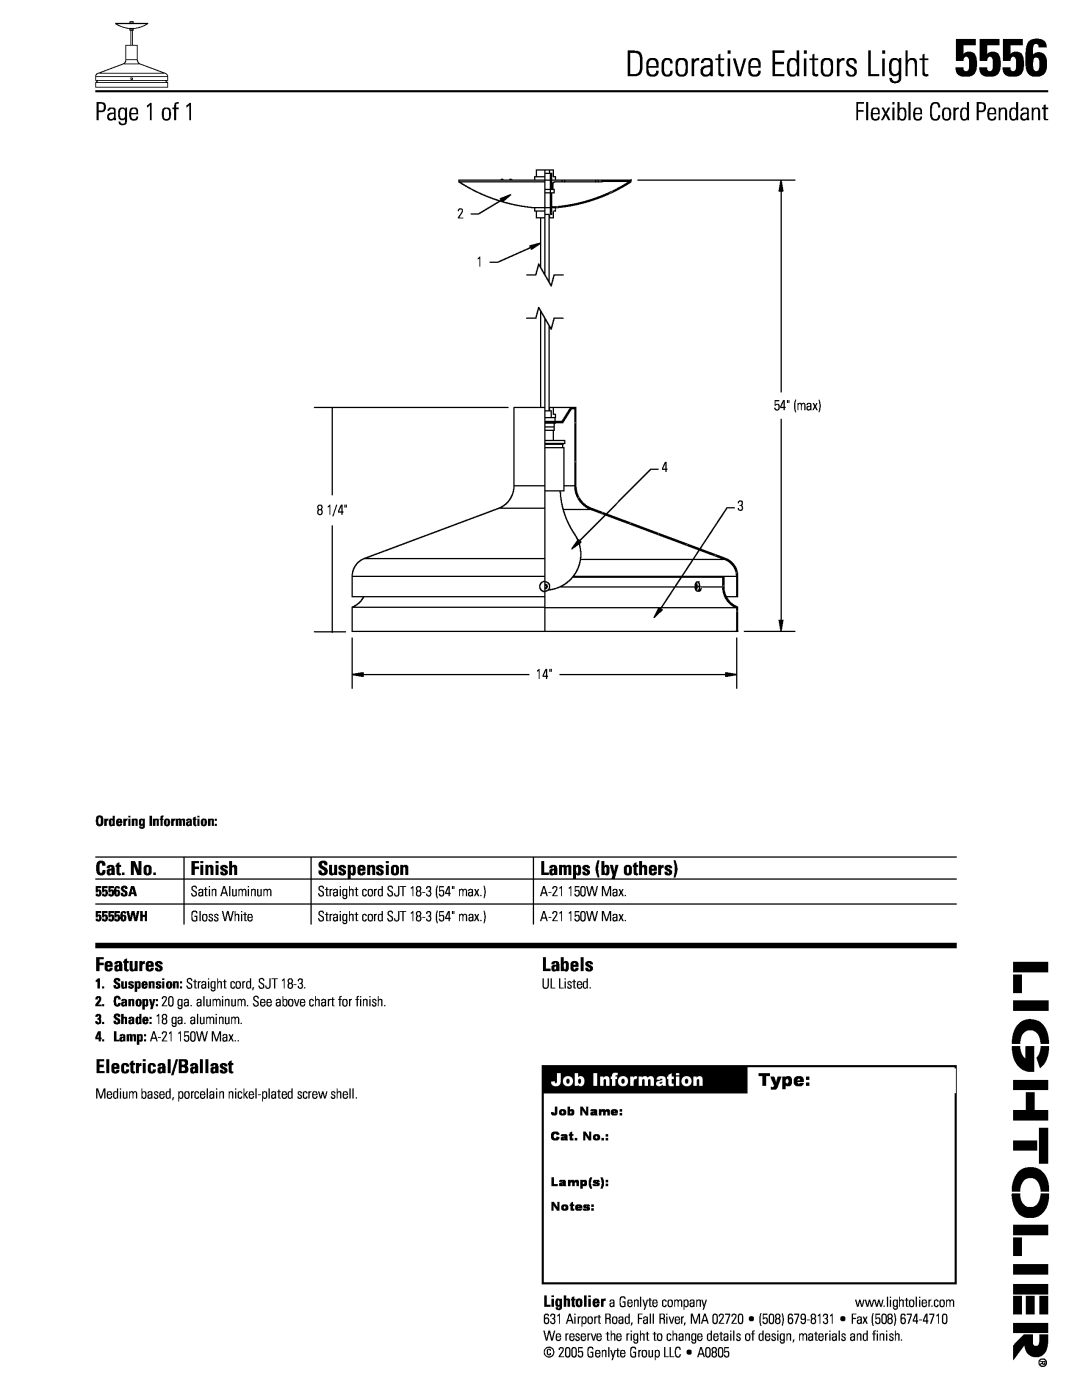 Lightolier 5556 manual Decorative Editors Light, Page 1 of, Flexible Cord Pendant, Cat. No, Finish, Suspension, Features 